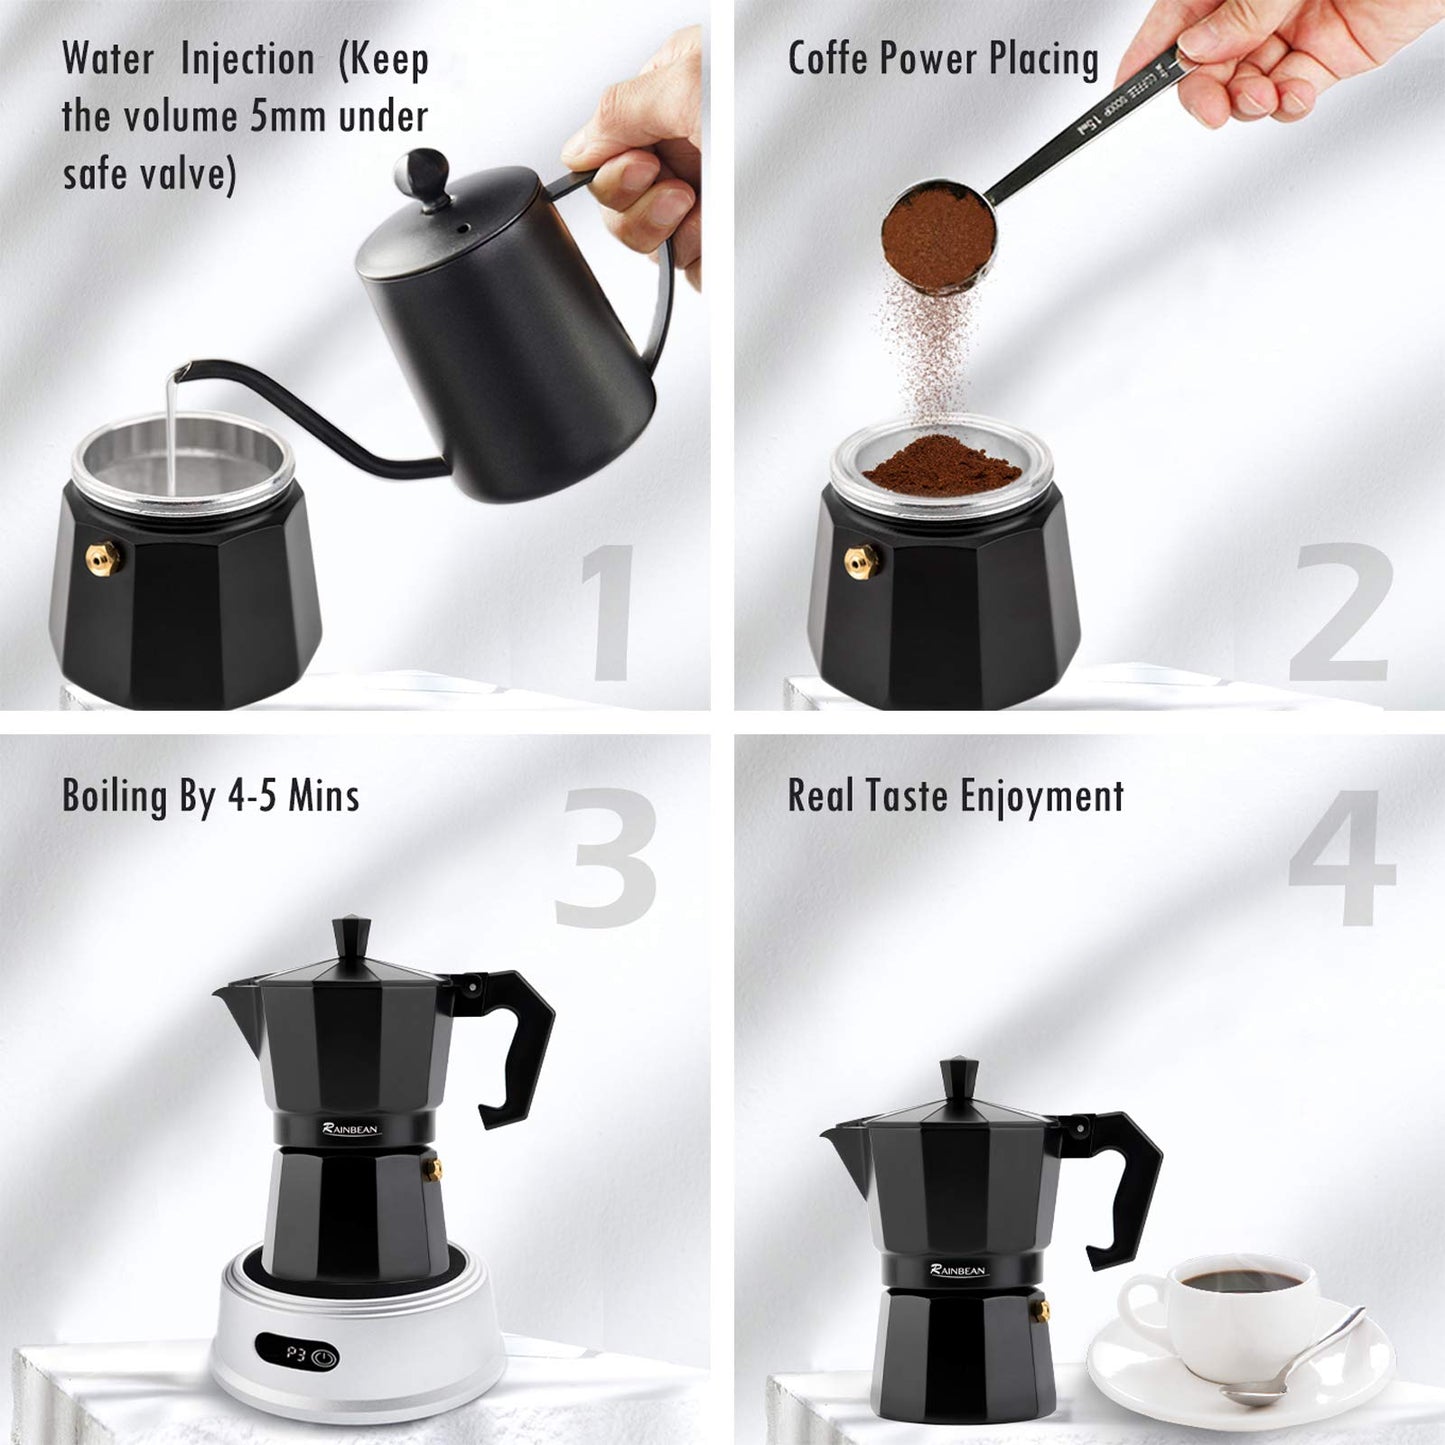 Stovetop Espresso Maker Espresso Cup Moka Pot Classic Cafe Maker Percolator Coffee Maker Italian Espresso for Gas or Electric Aluminum Black Gift package with 2 cups Amazon Platform Banned-Masscheap